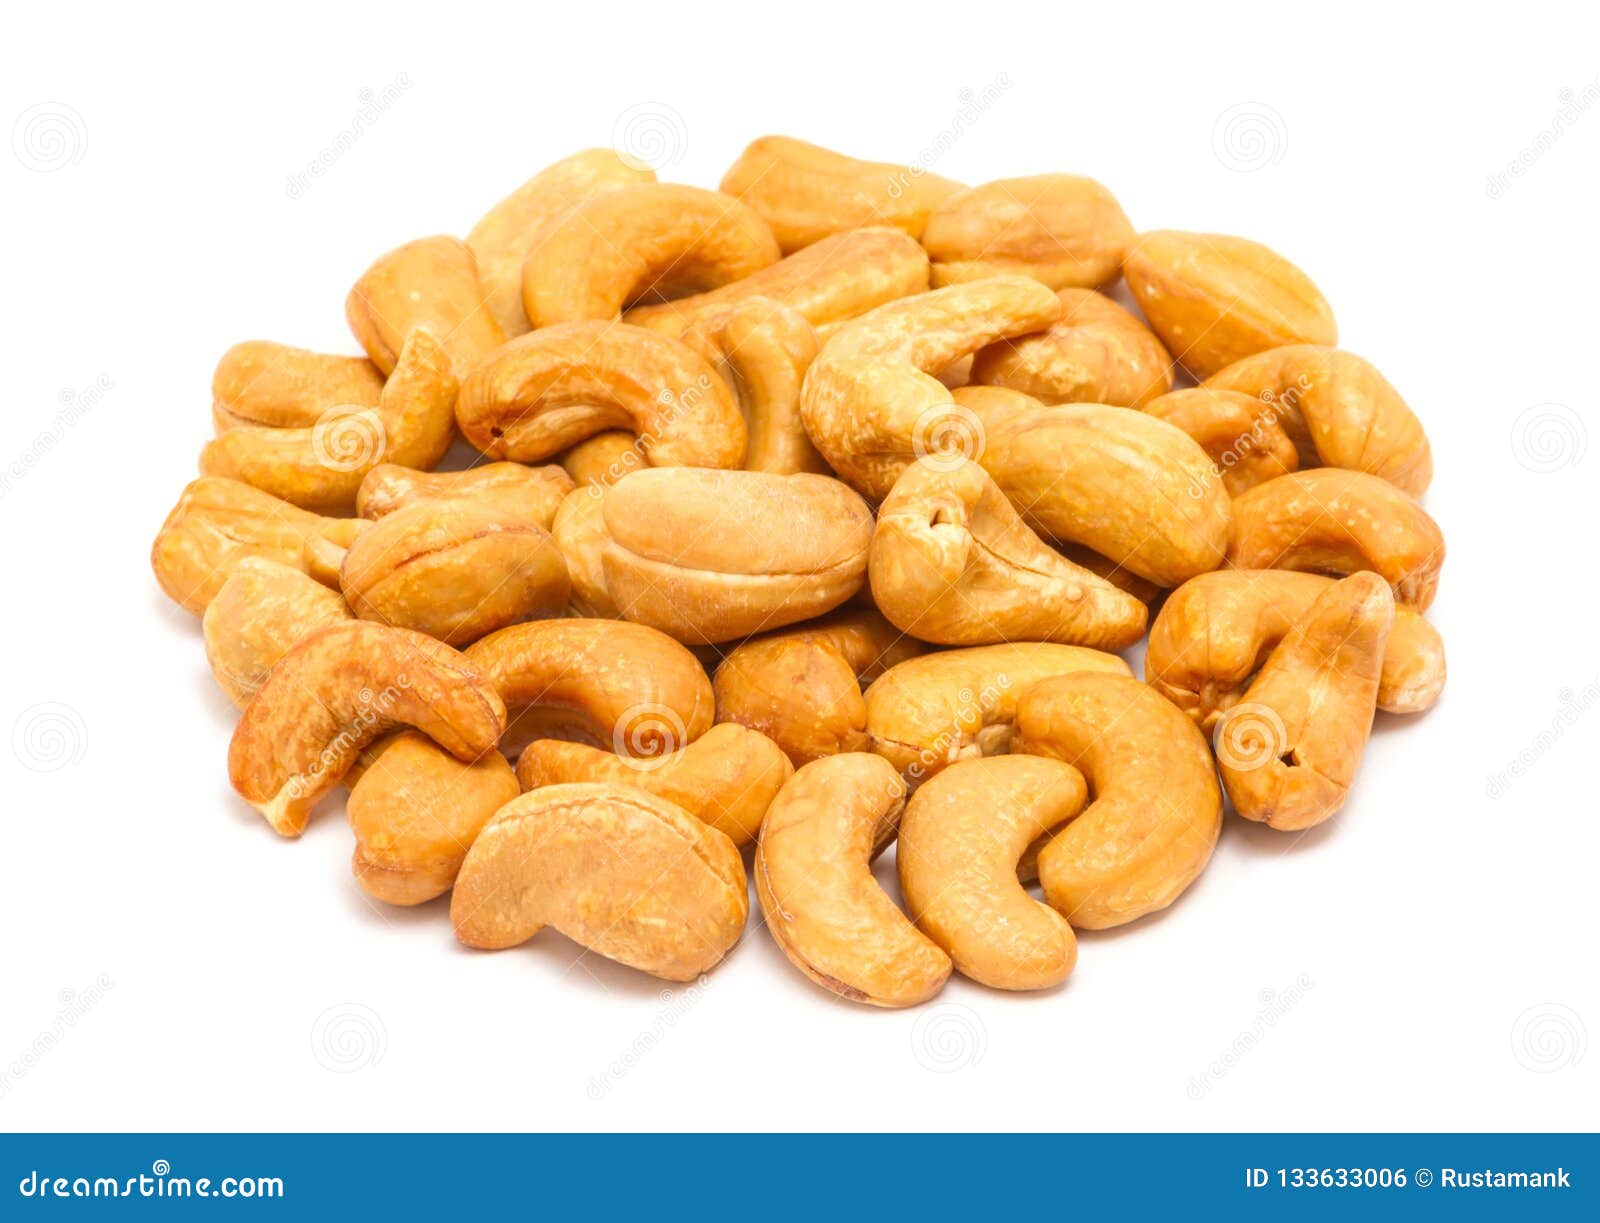 handful of roasted cashew seeds anacardium occidentale without shell